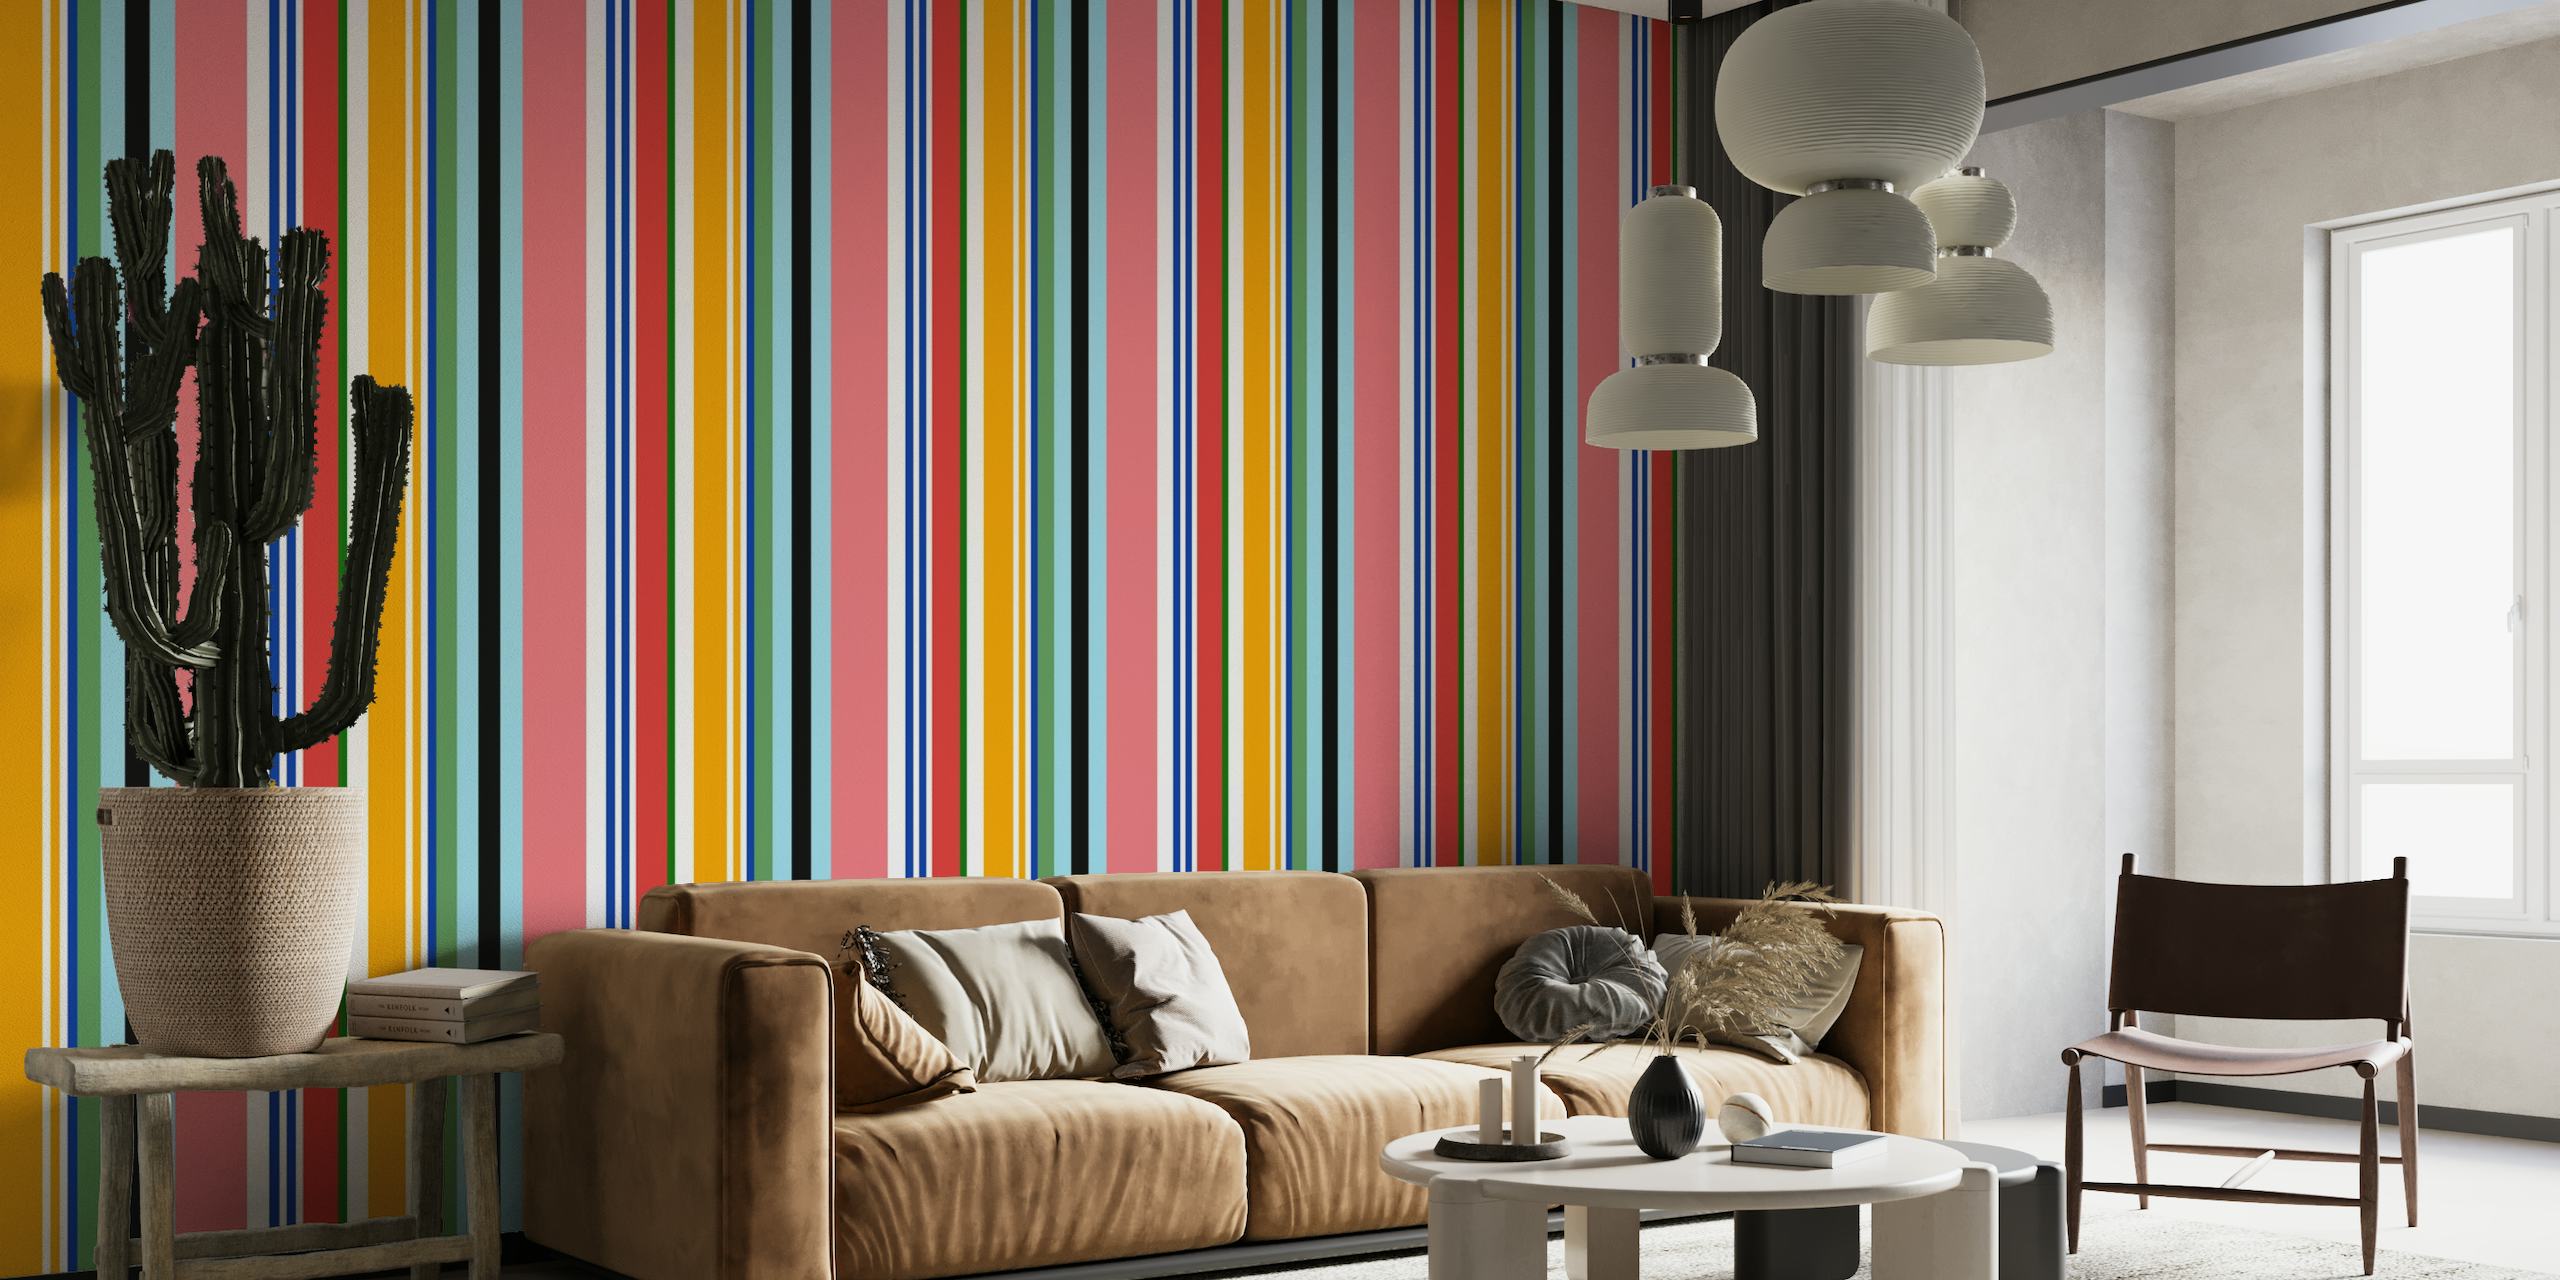 Nautical french bayadère (colorful stripes) wallpaper